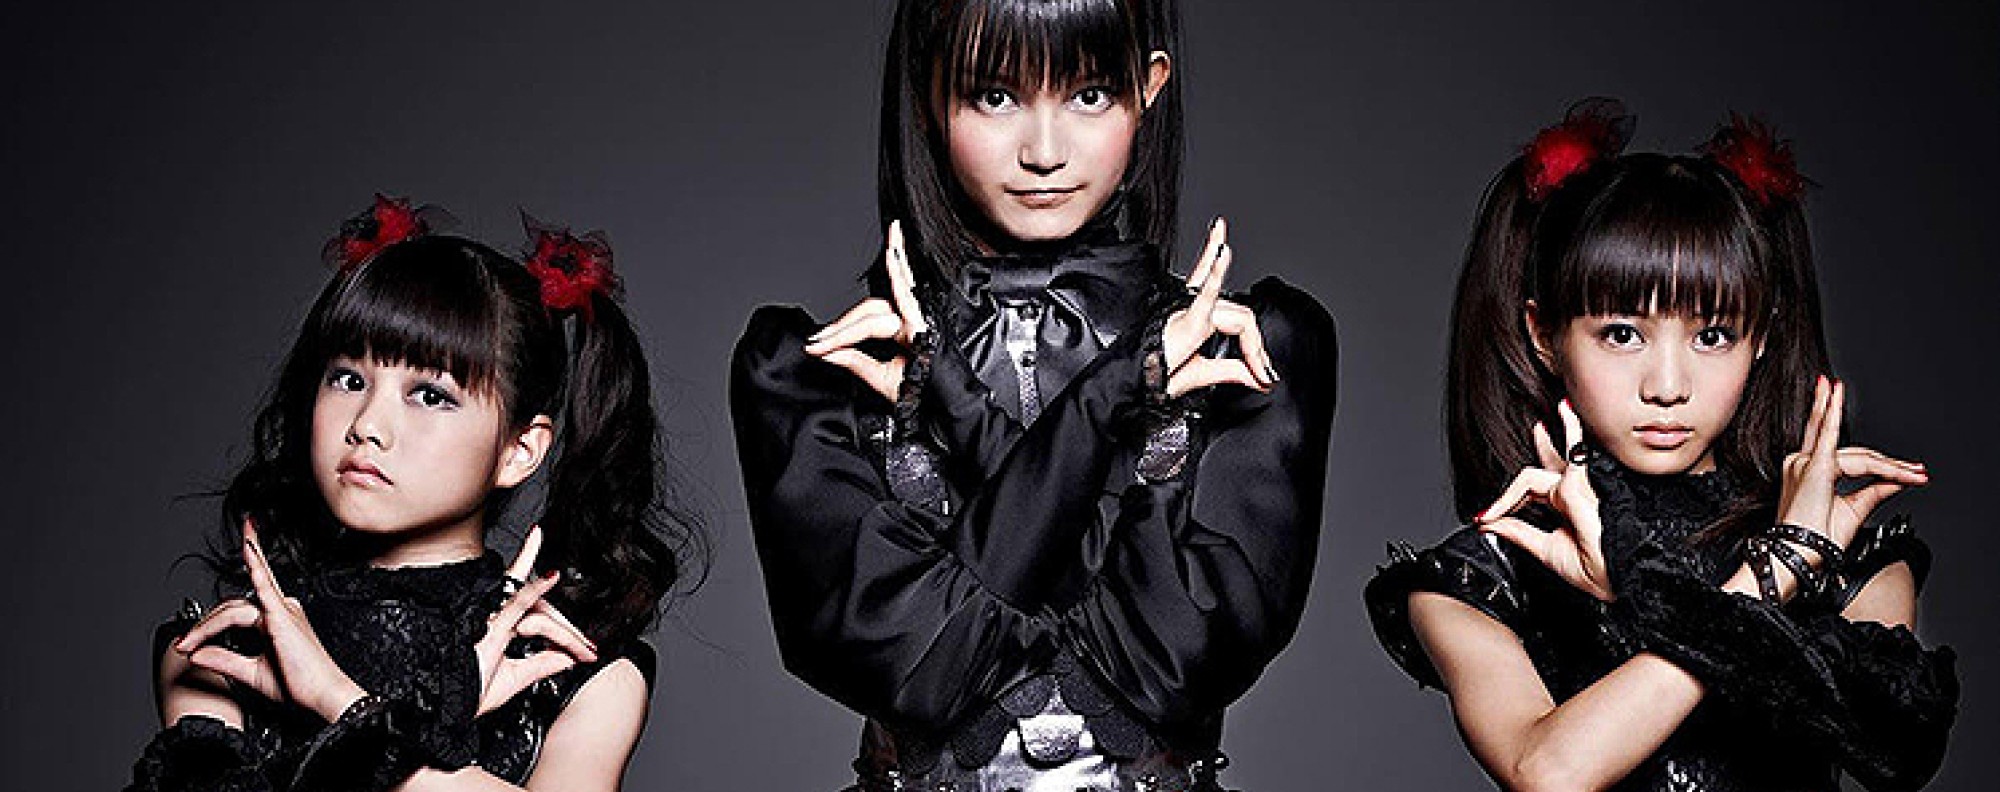 Meet Babymetal: Japan's bizarre mix of teen-idol pop and metal | South China Morning Post